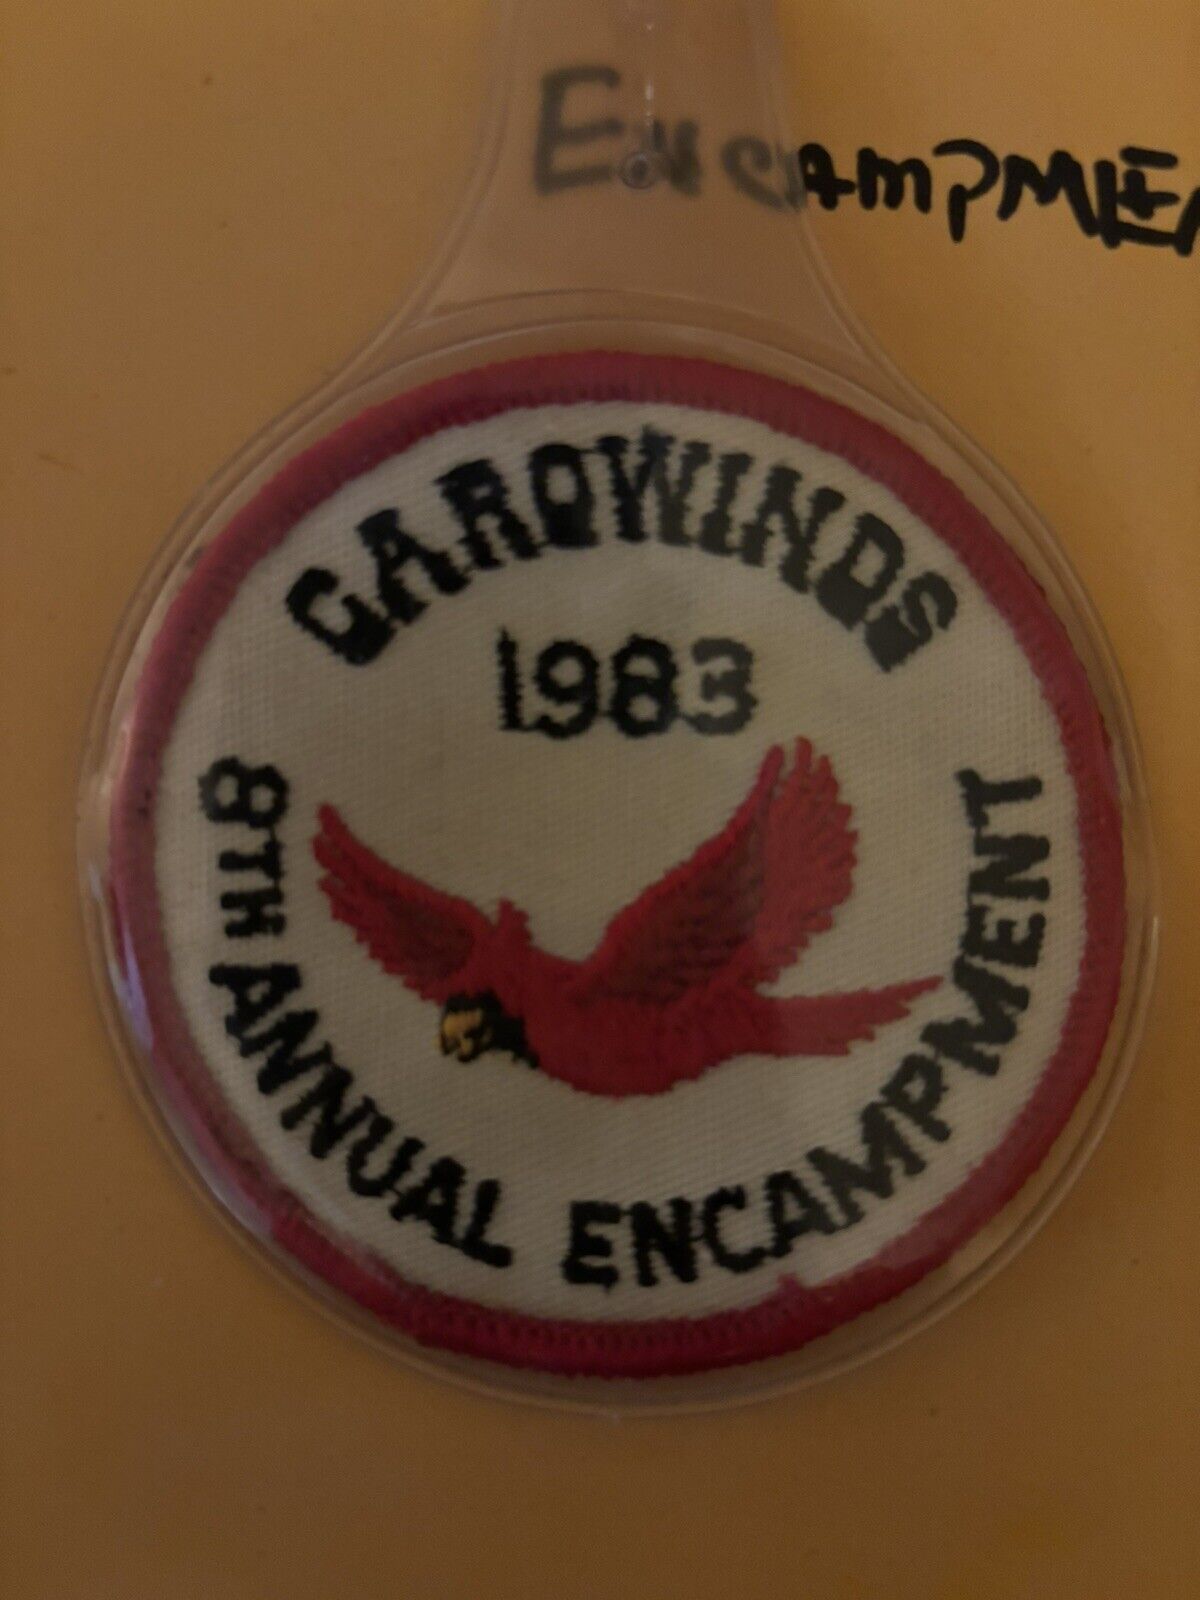 1983 8th Annual Caroline’s Encampment